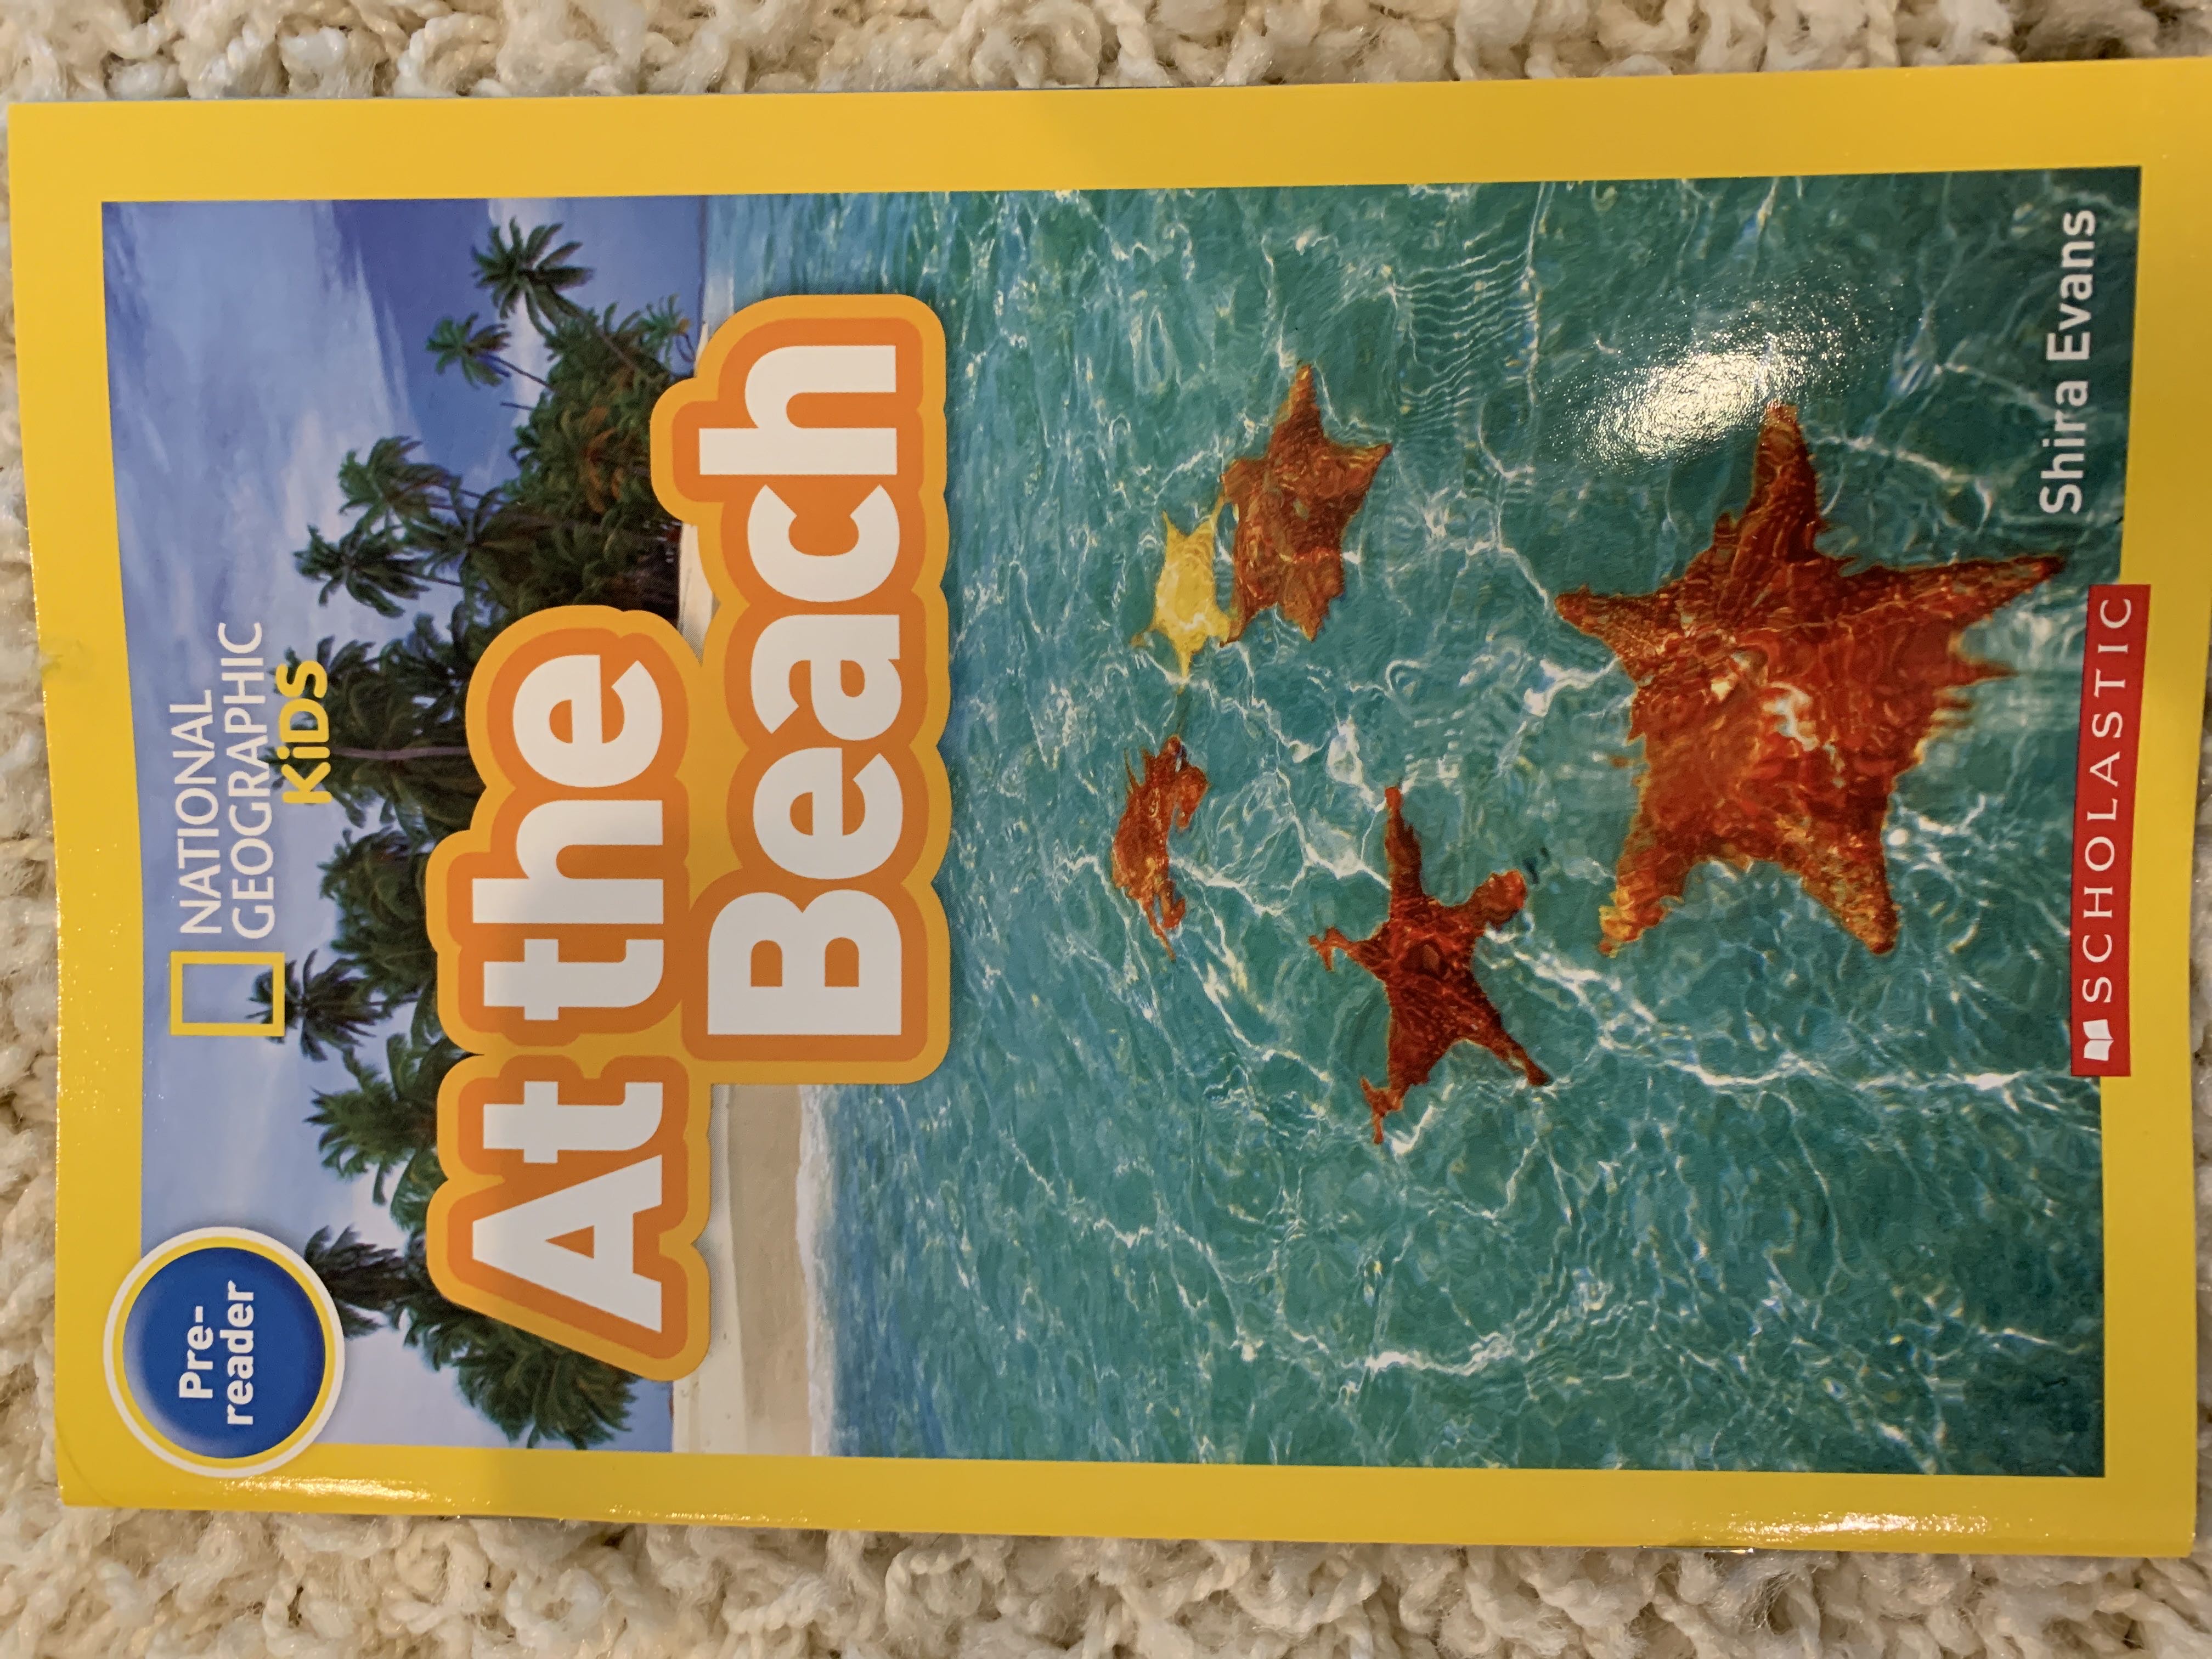 At The Beach NGK - Shira Evans (Scholastic, Inc.) book collectible [Barcode 9781338529883] - Main Image 1